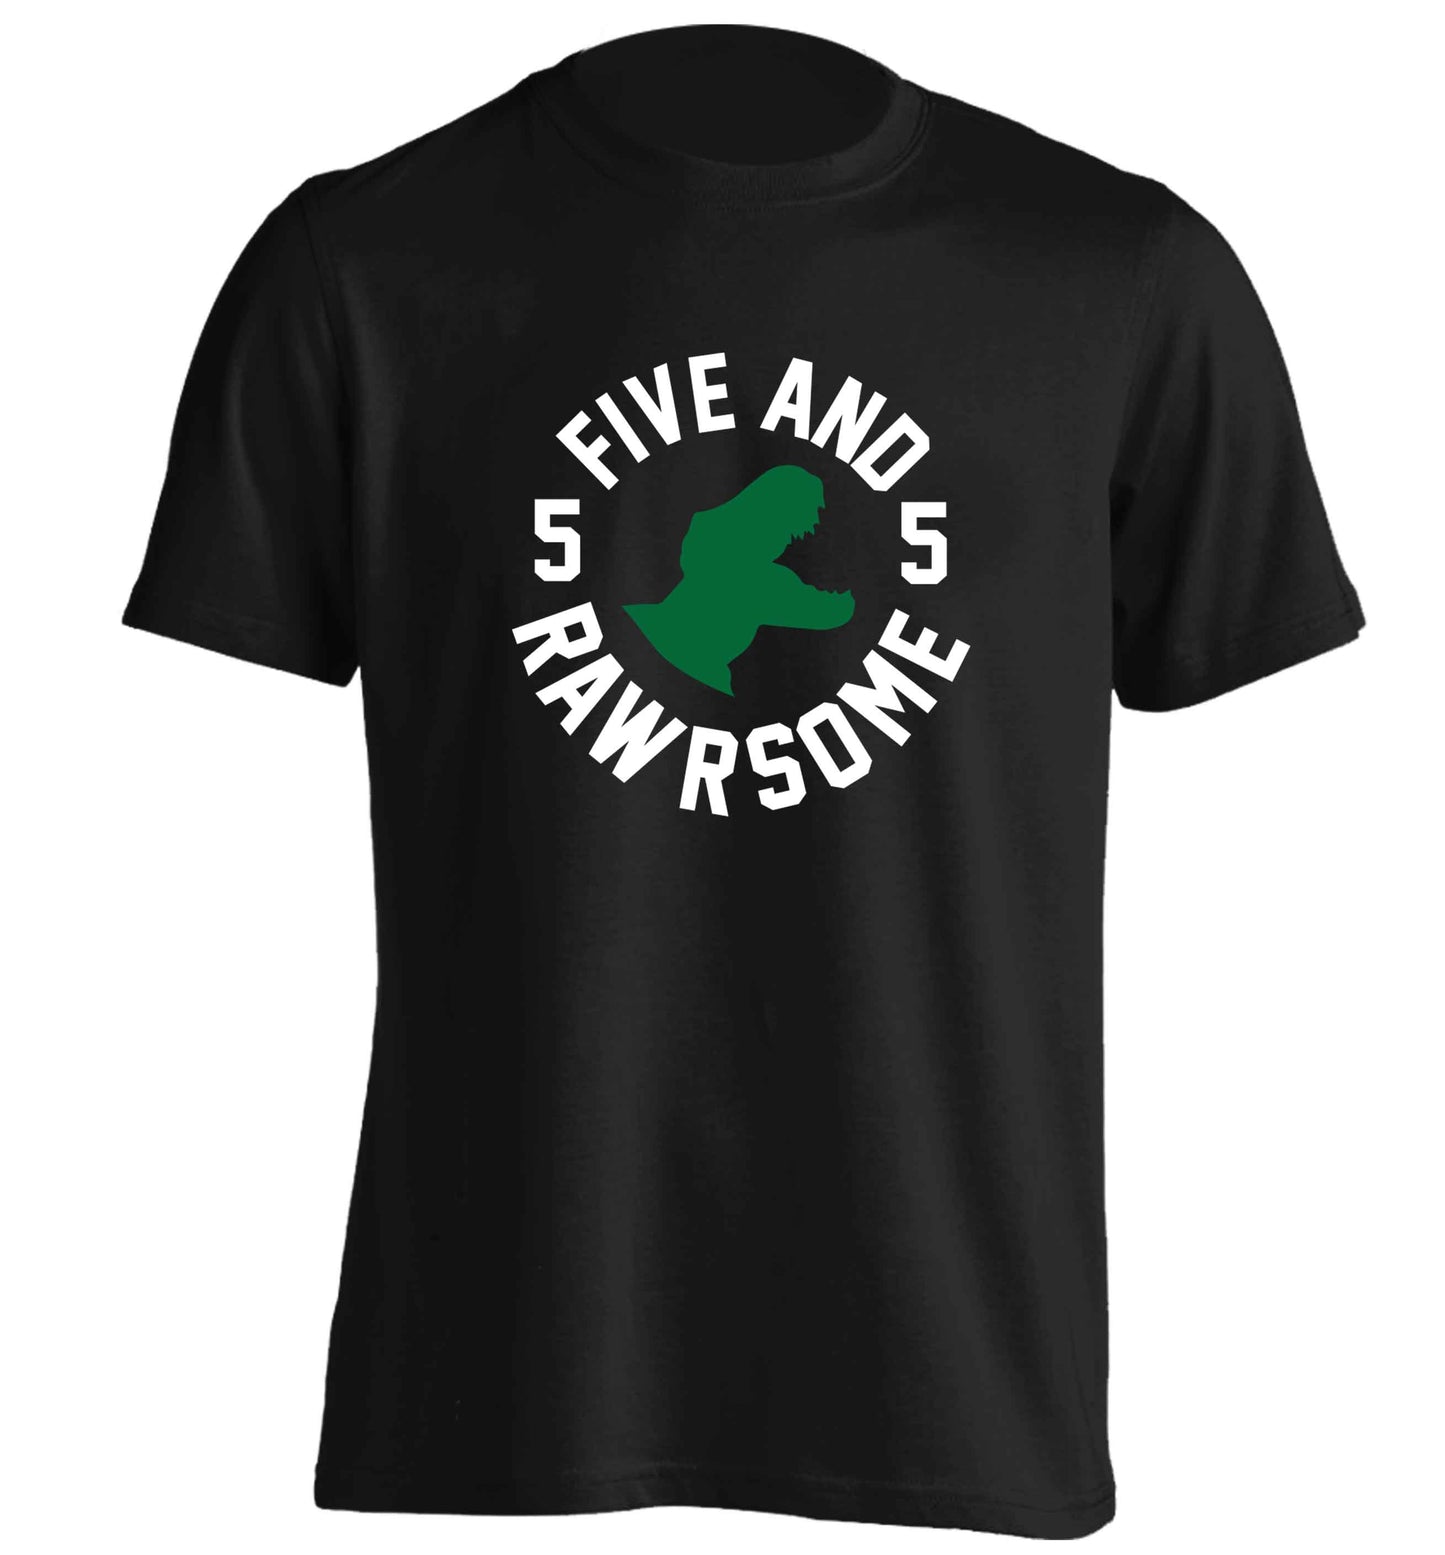 Five and rawrsome adults unisex black Tshirt 2XL